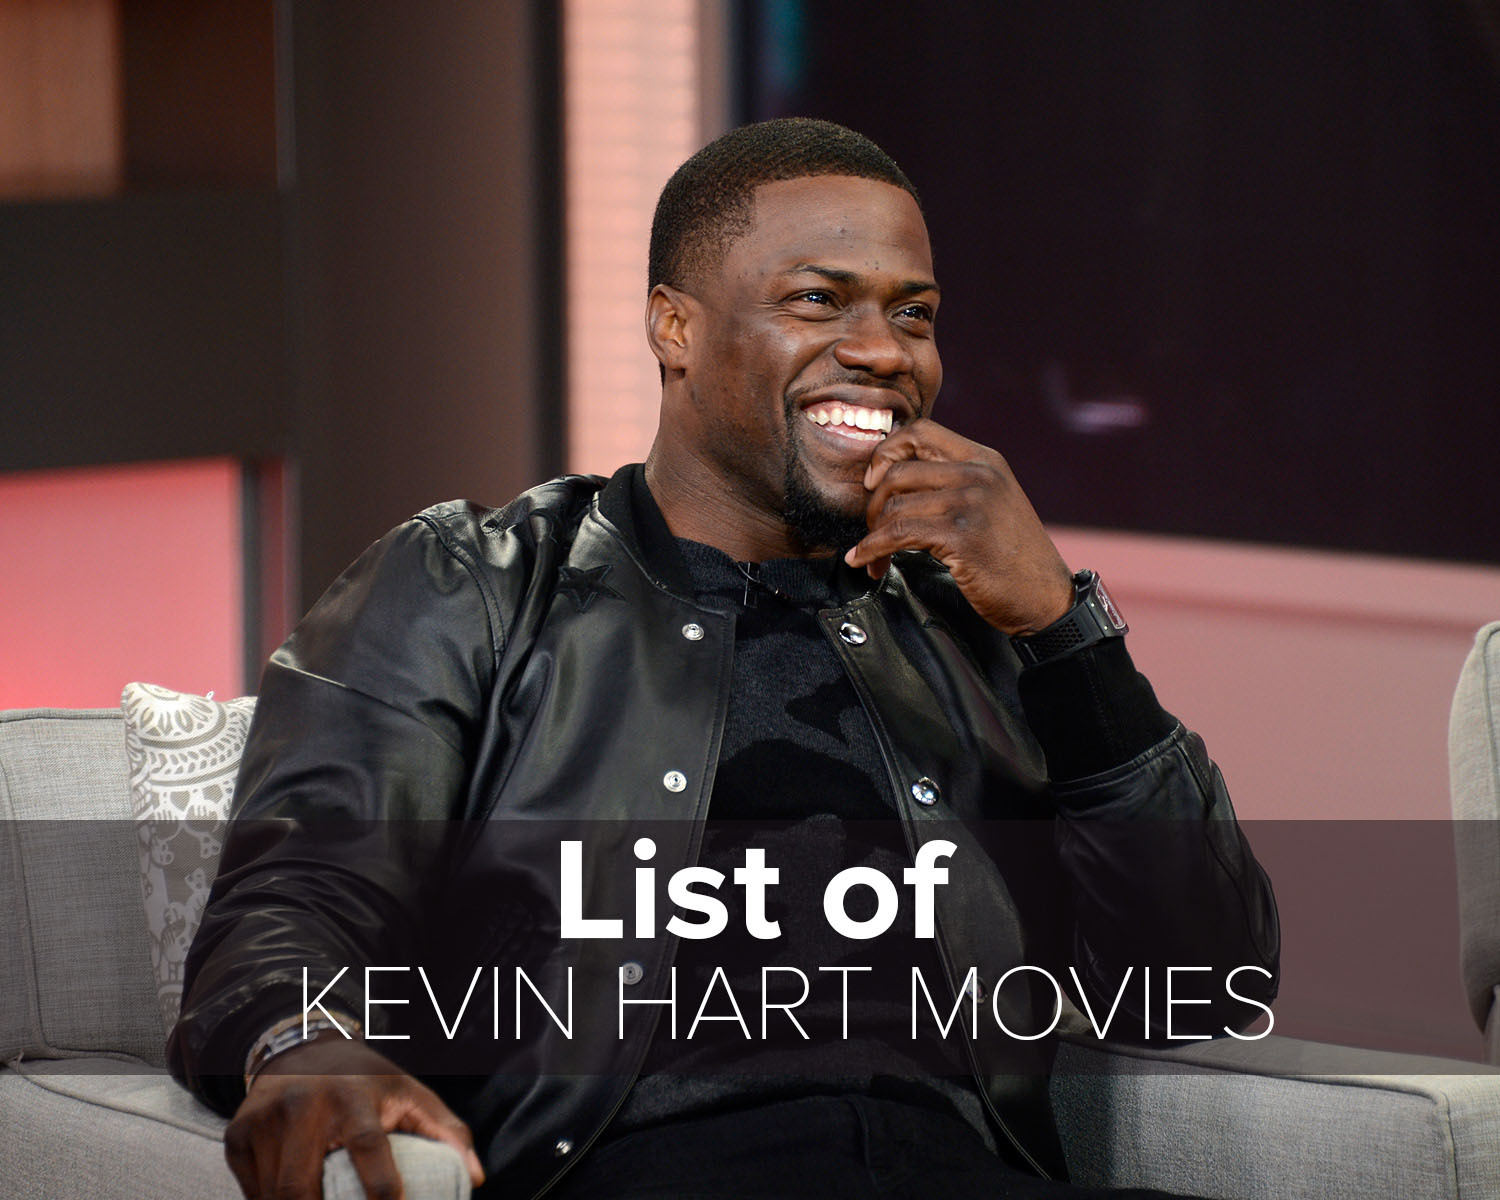 List of Kevin Hart movies, kevin hart movies 2018
kevin hart movies 2017